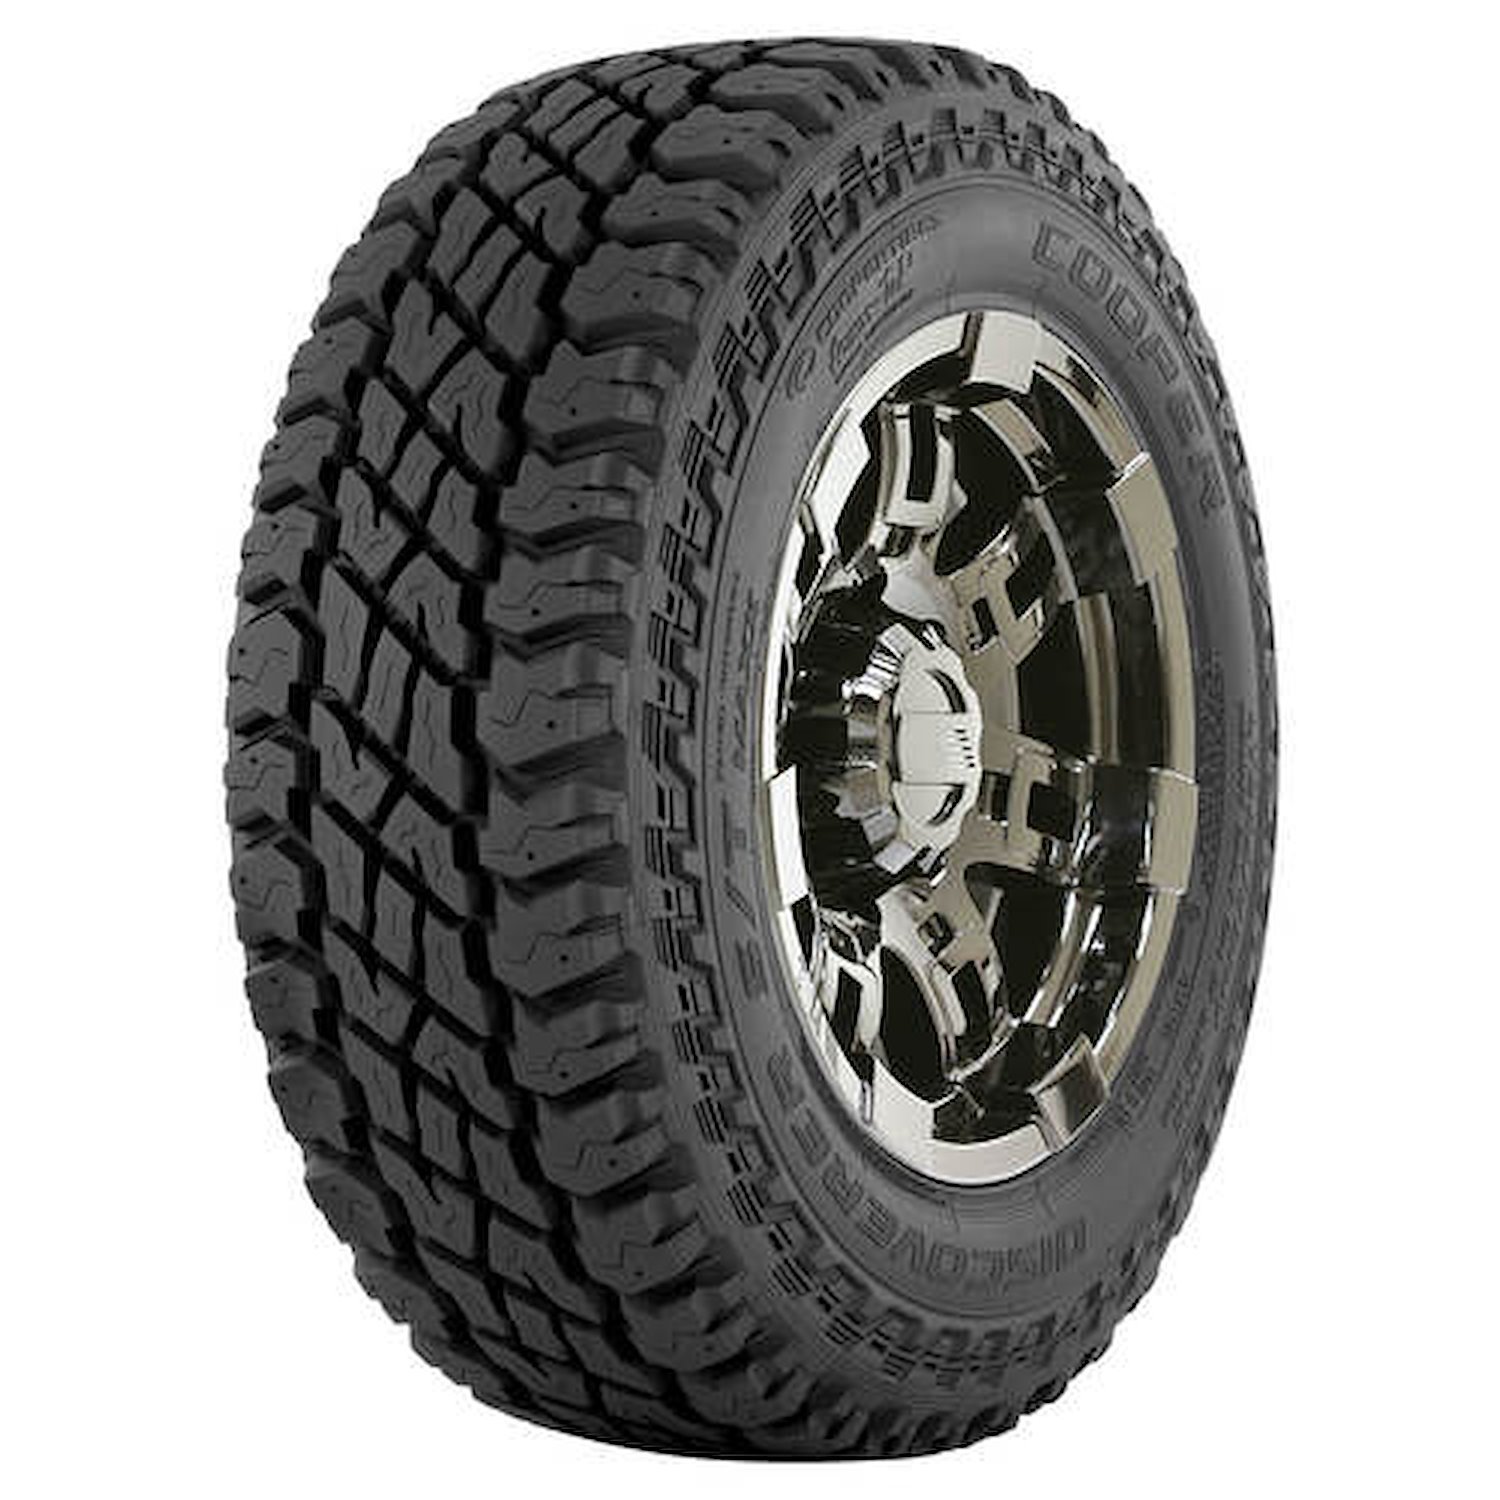 Discoverer S/T Maxx All-Terrain Tire, LT225/75R16